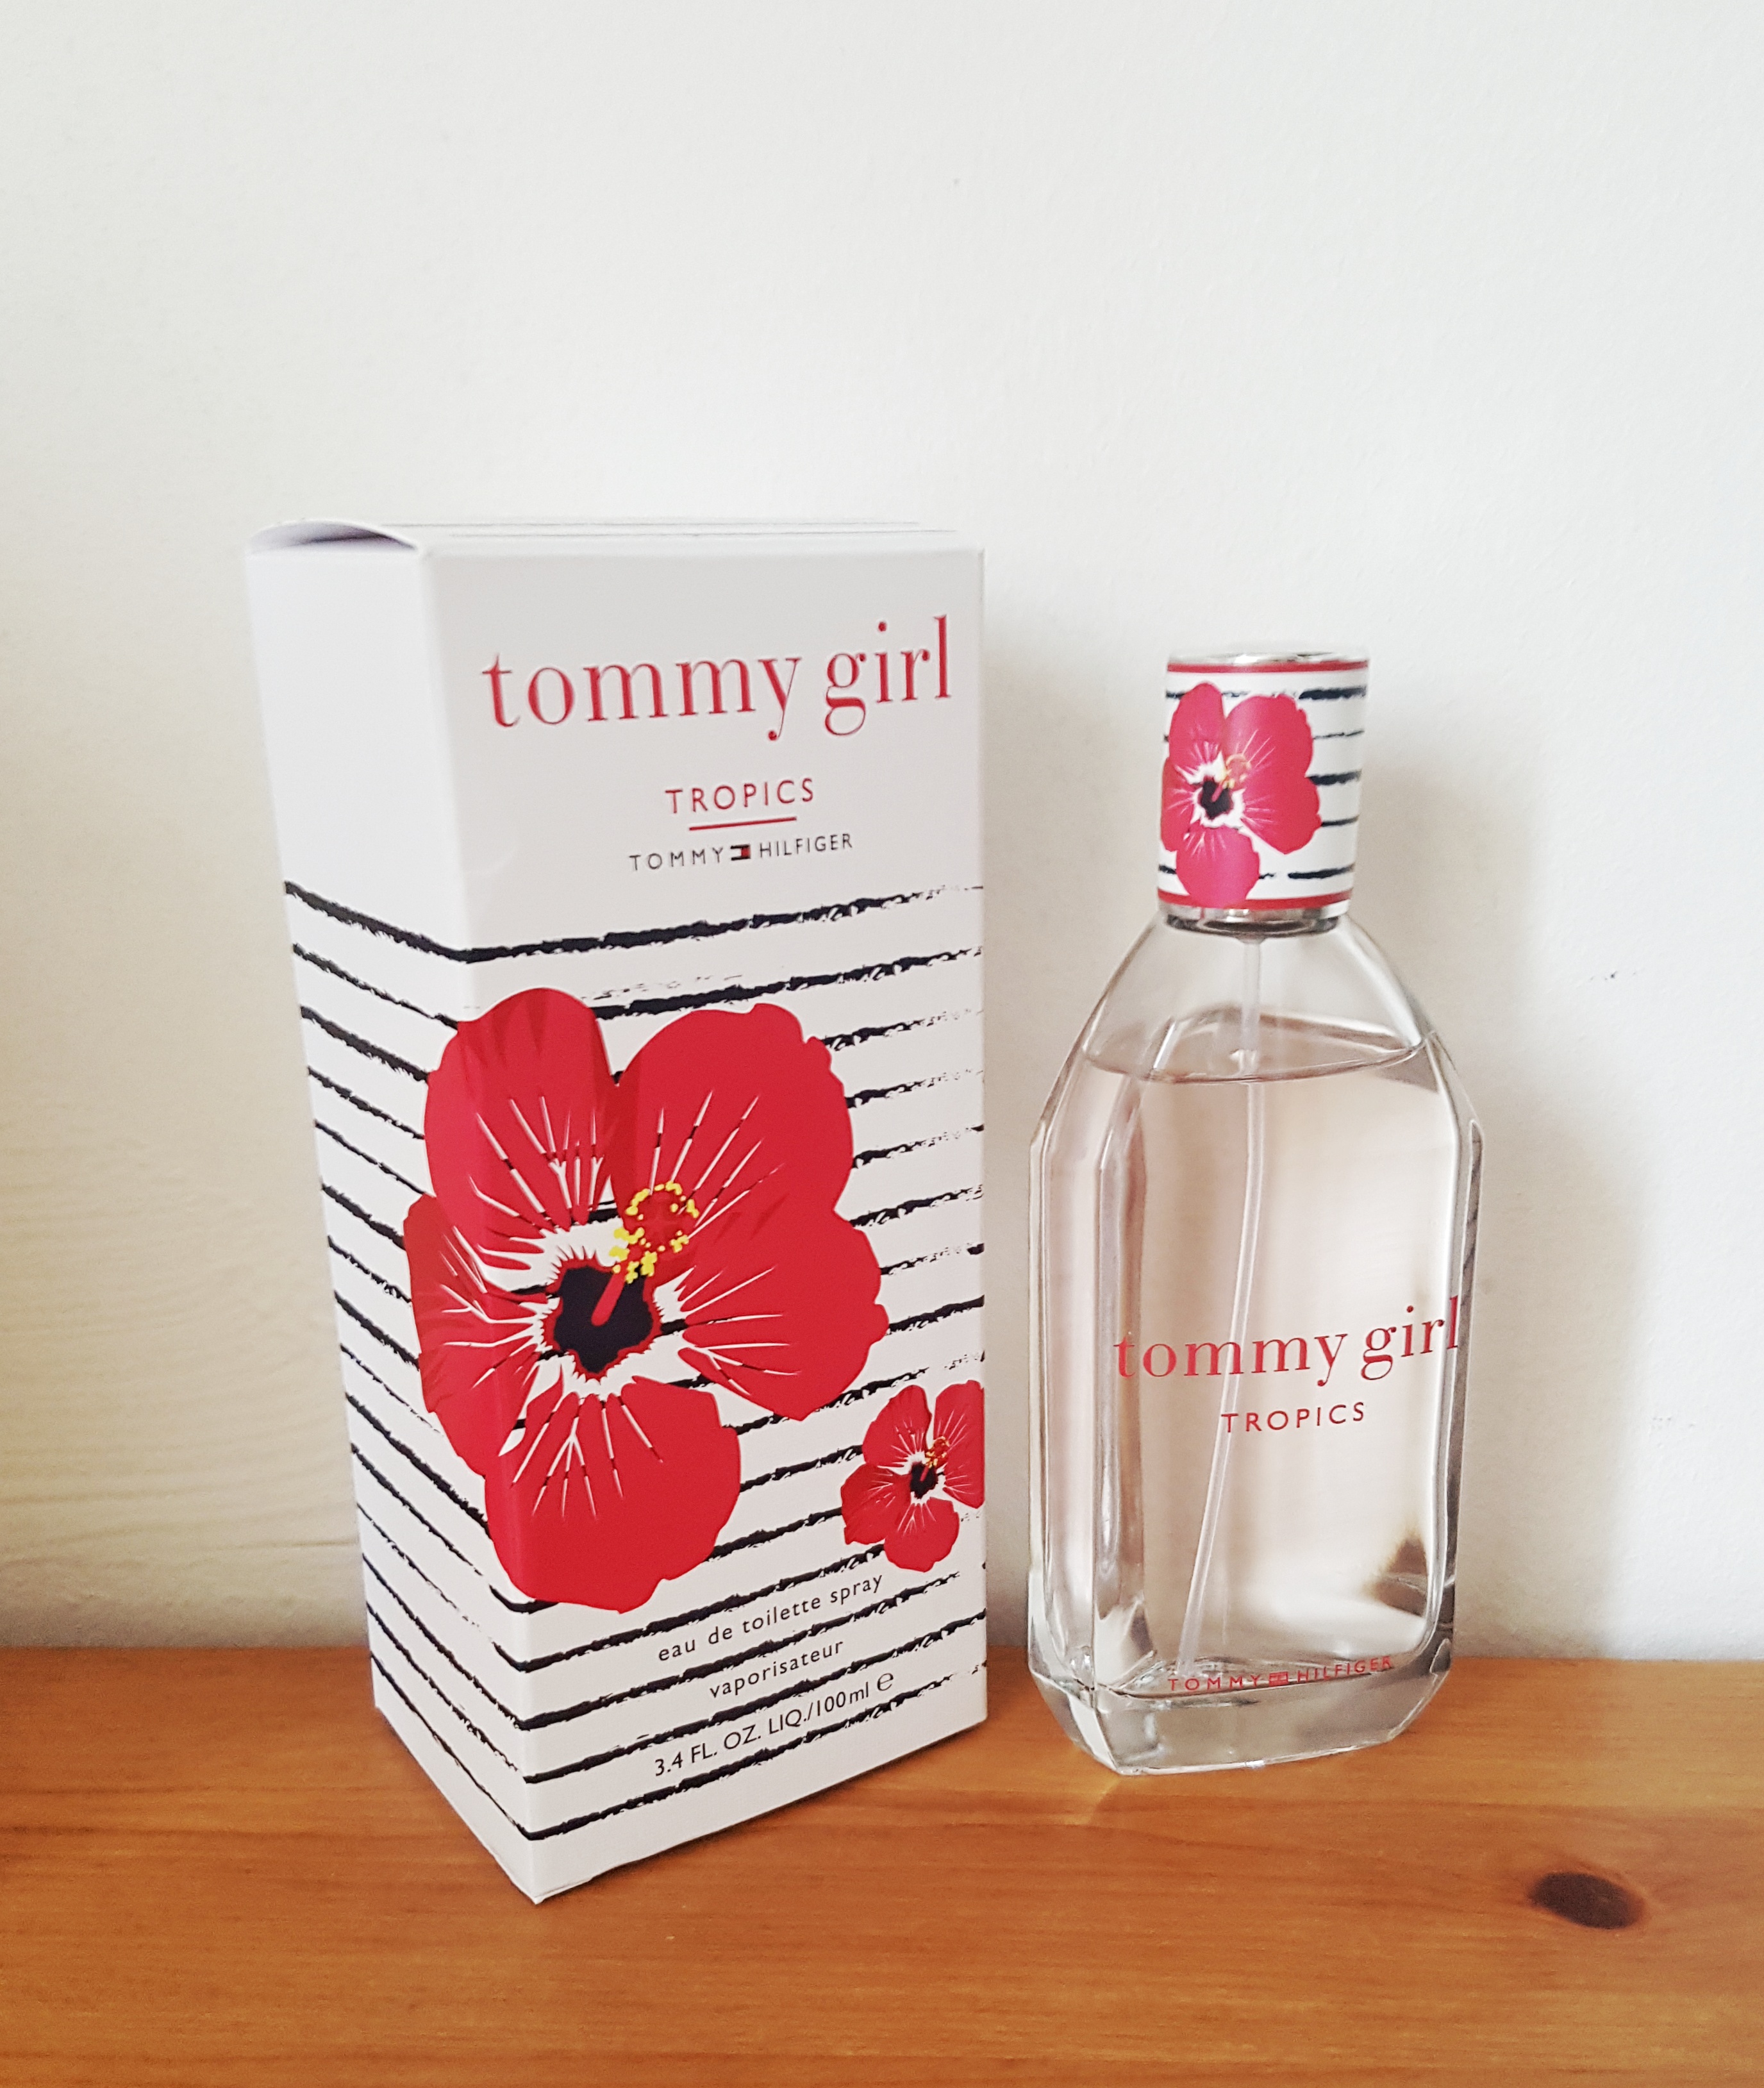 perfume tommy girl tropics